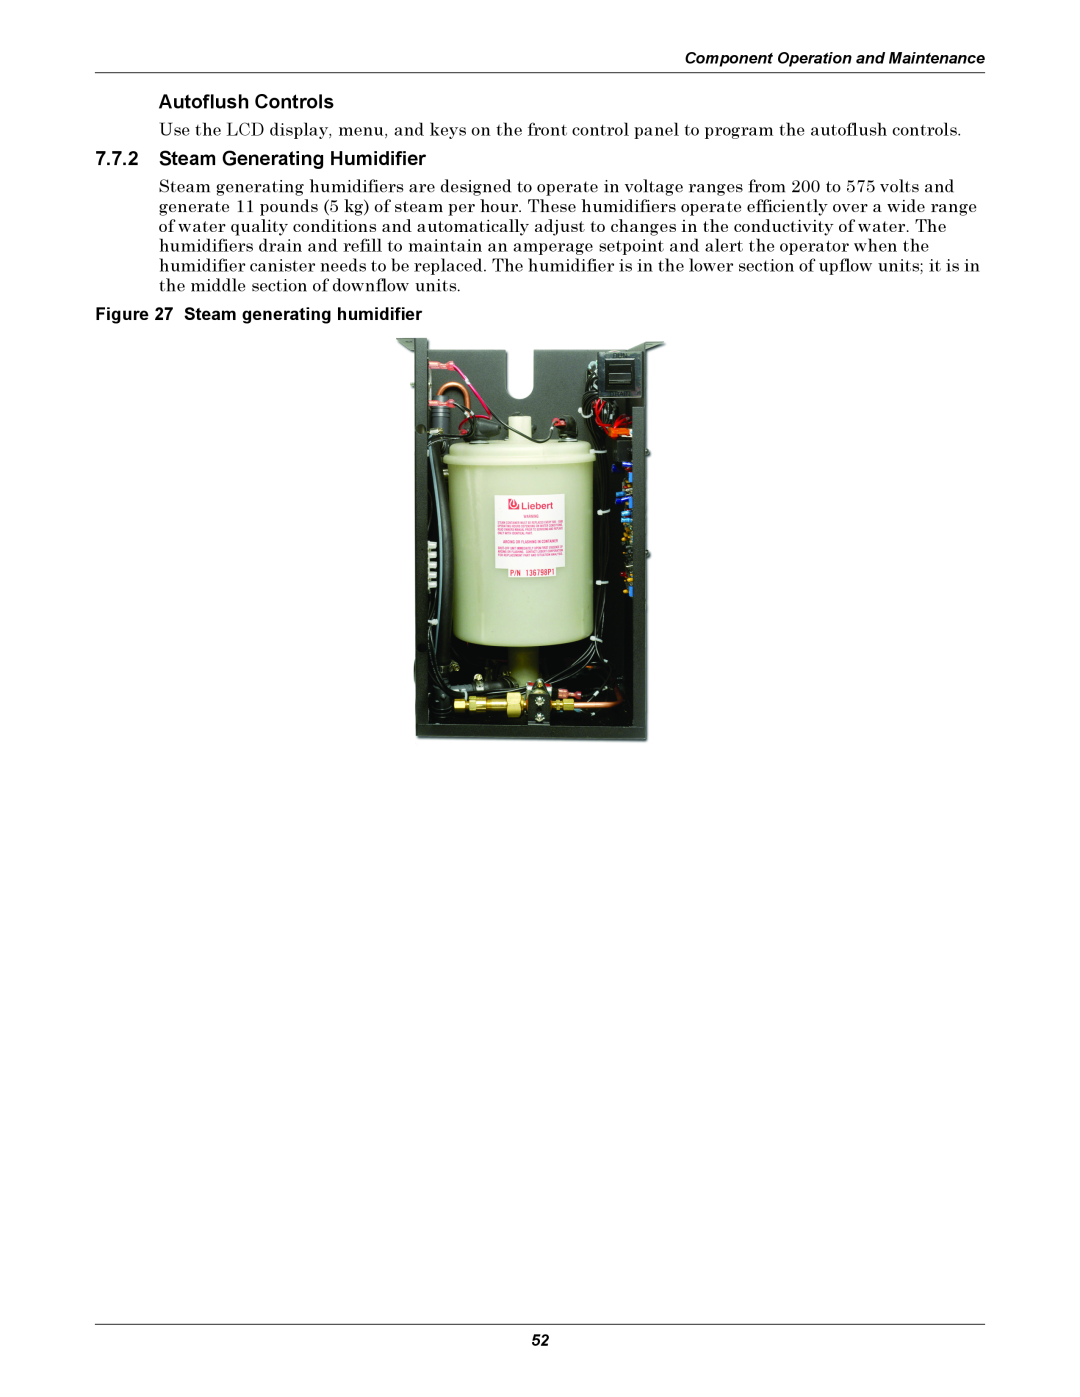 Emerson 3000/ITR manual Autoflush Controls, 7.7.2Steam Generating Humidifier, Steam generating humidifier 